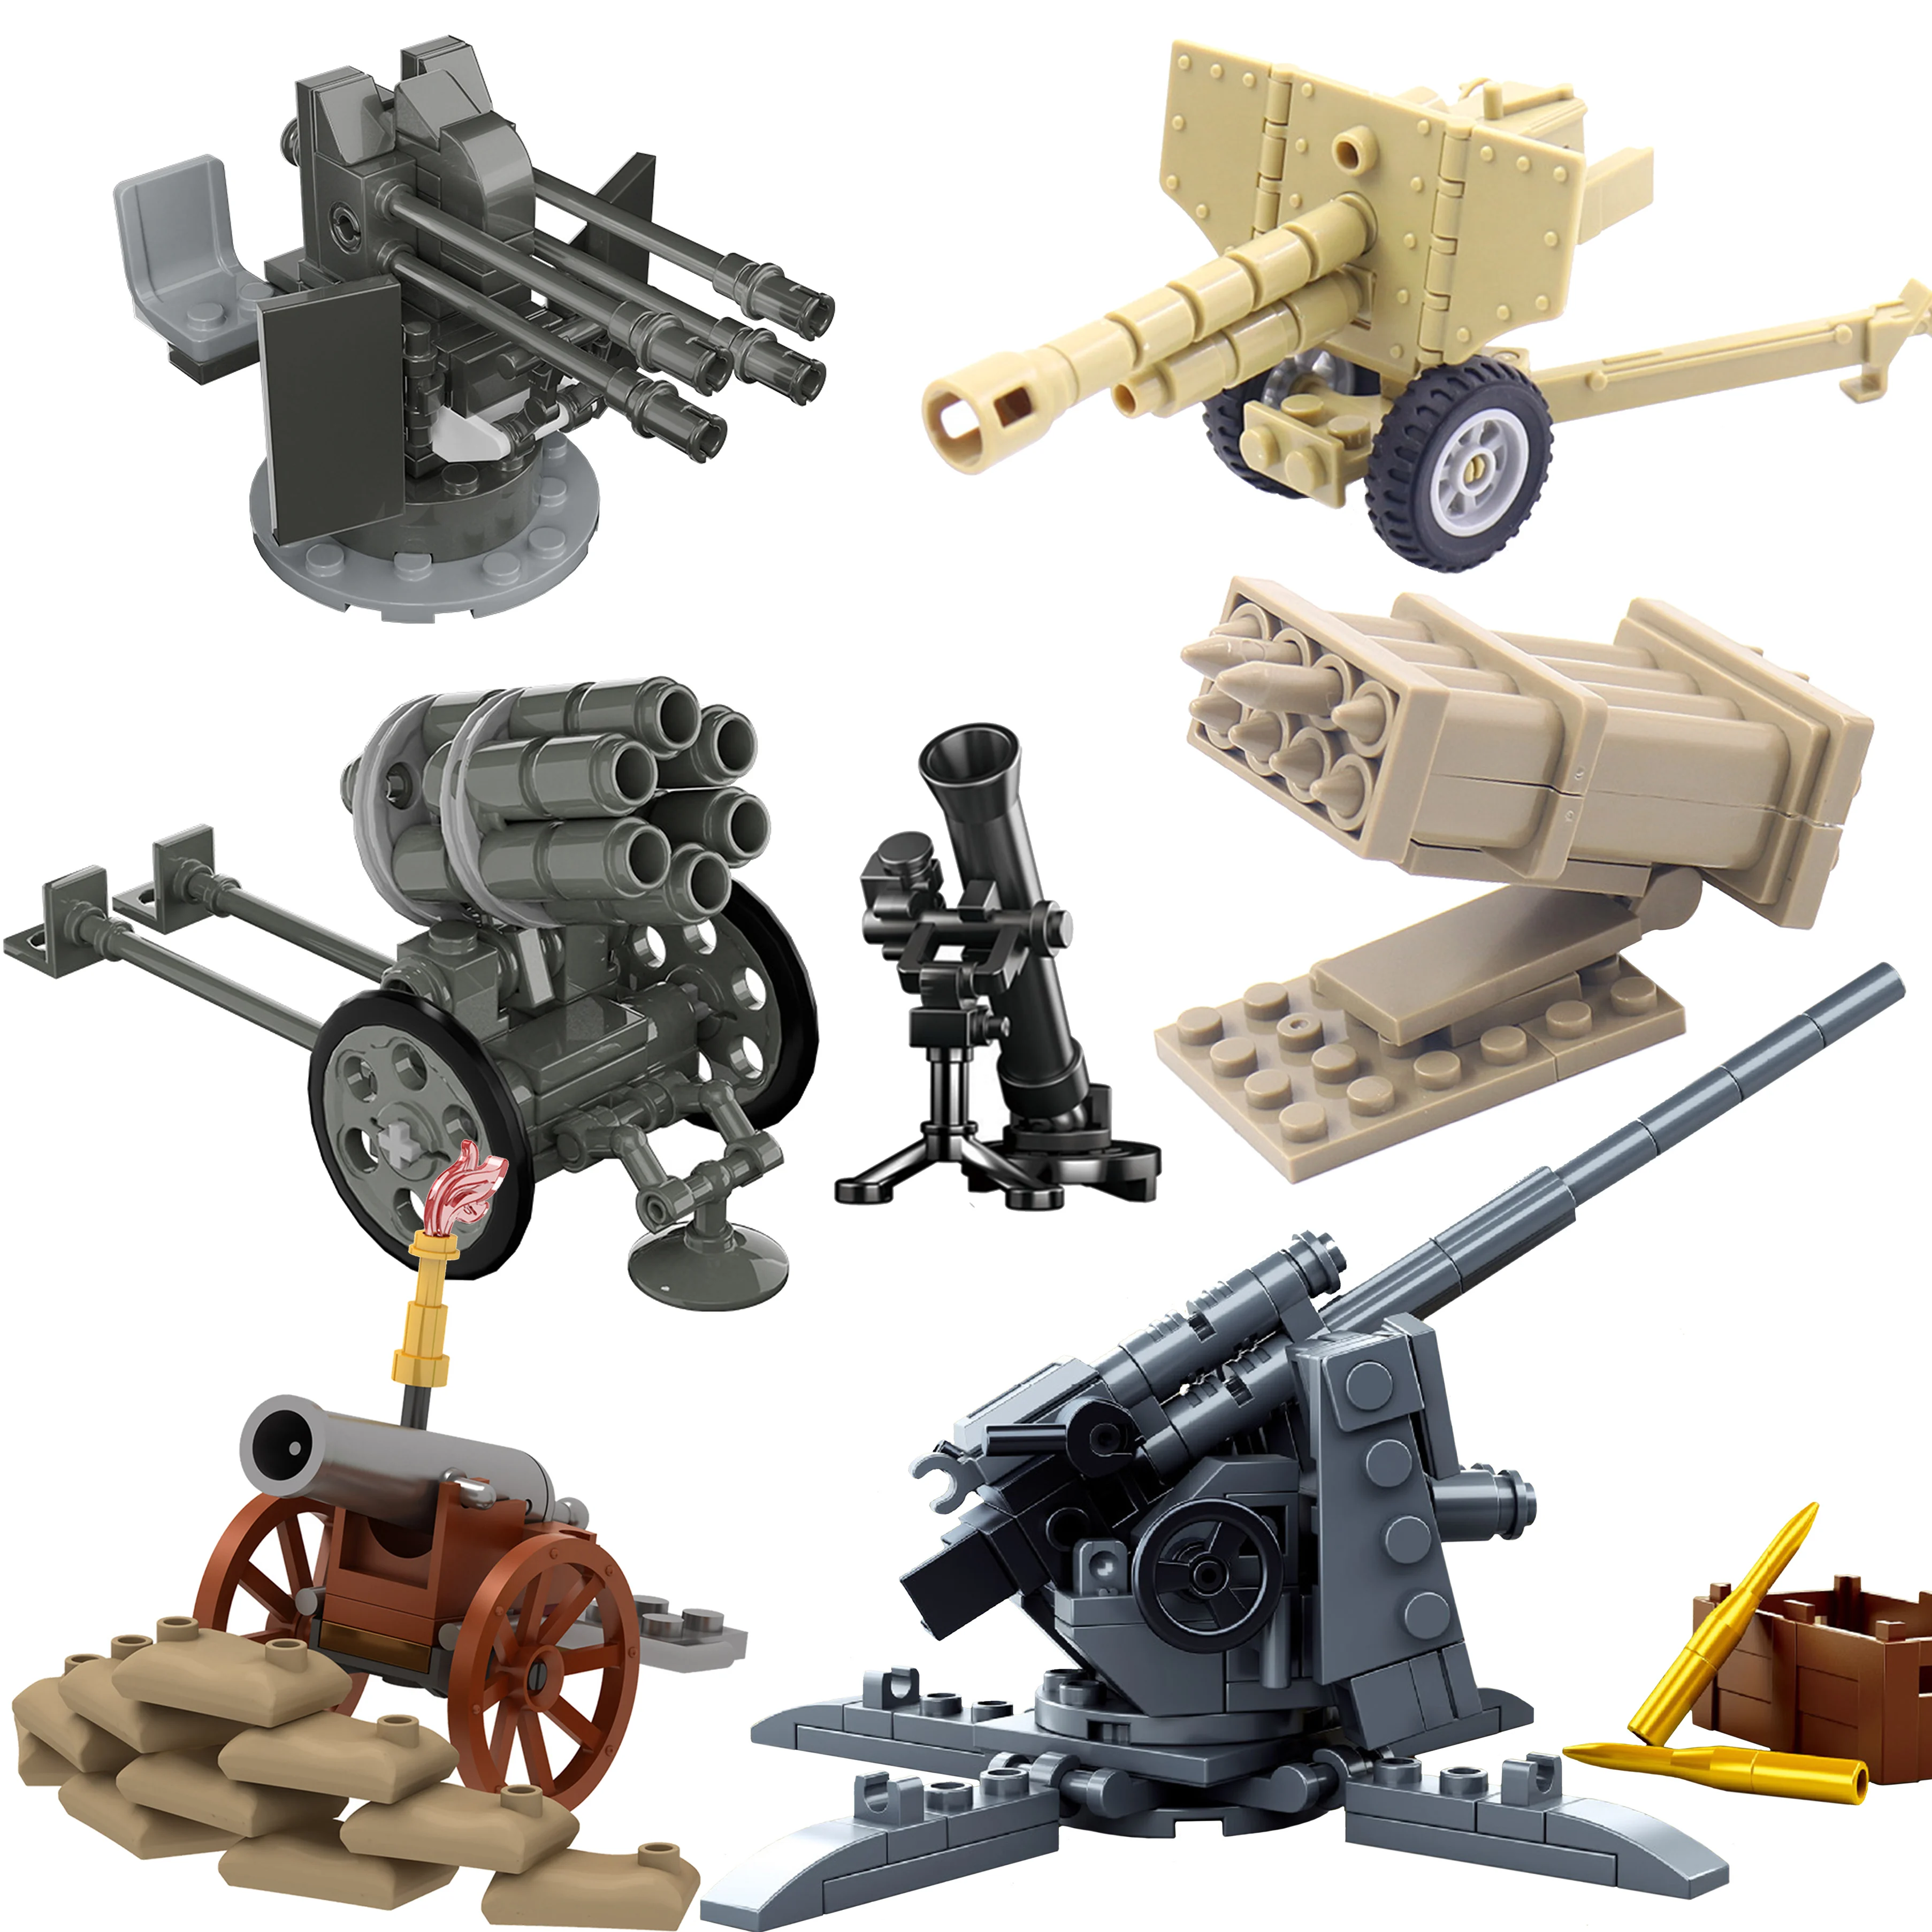 

WW2 88mm Flak Gun Cannon Rocket Artillery Military Army War Weapon Soldier MOC Playmobil Model Building Block Children kid Toy